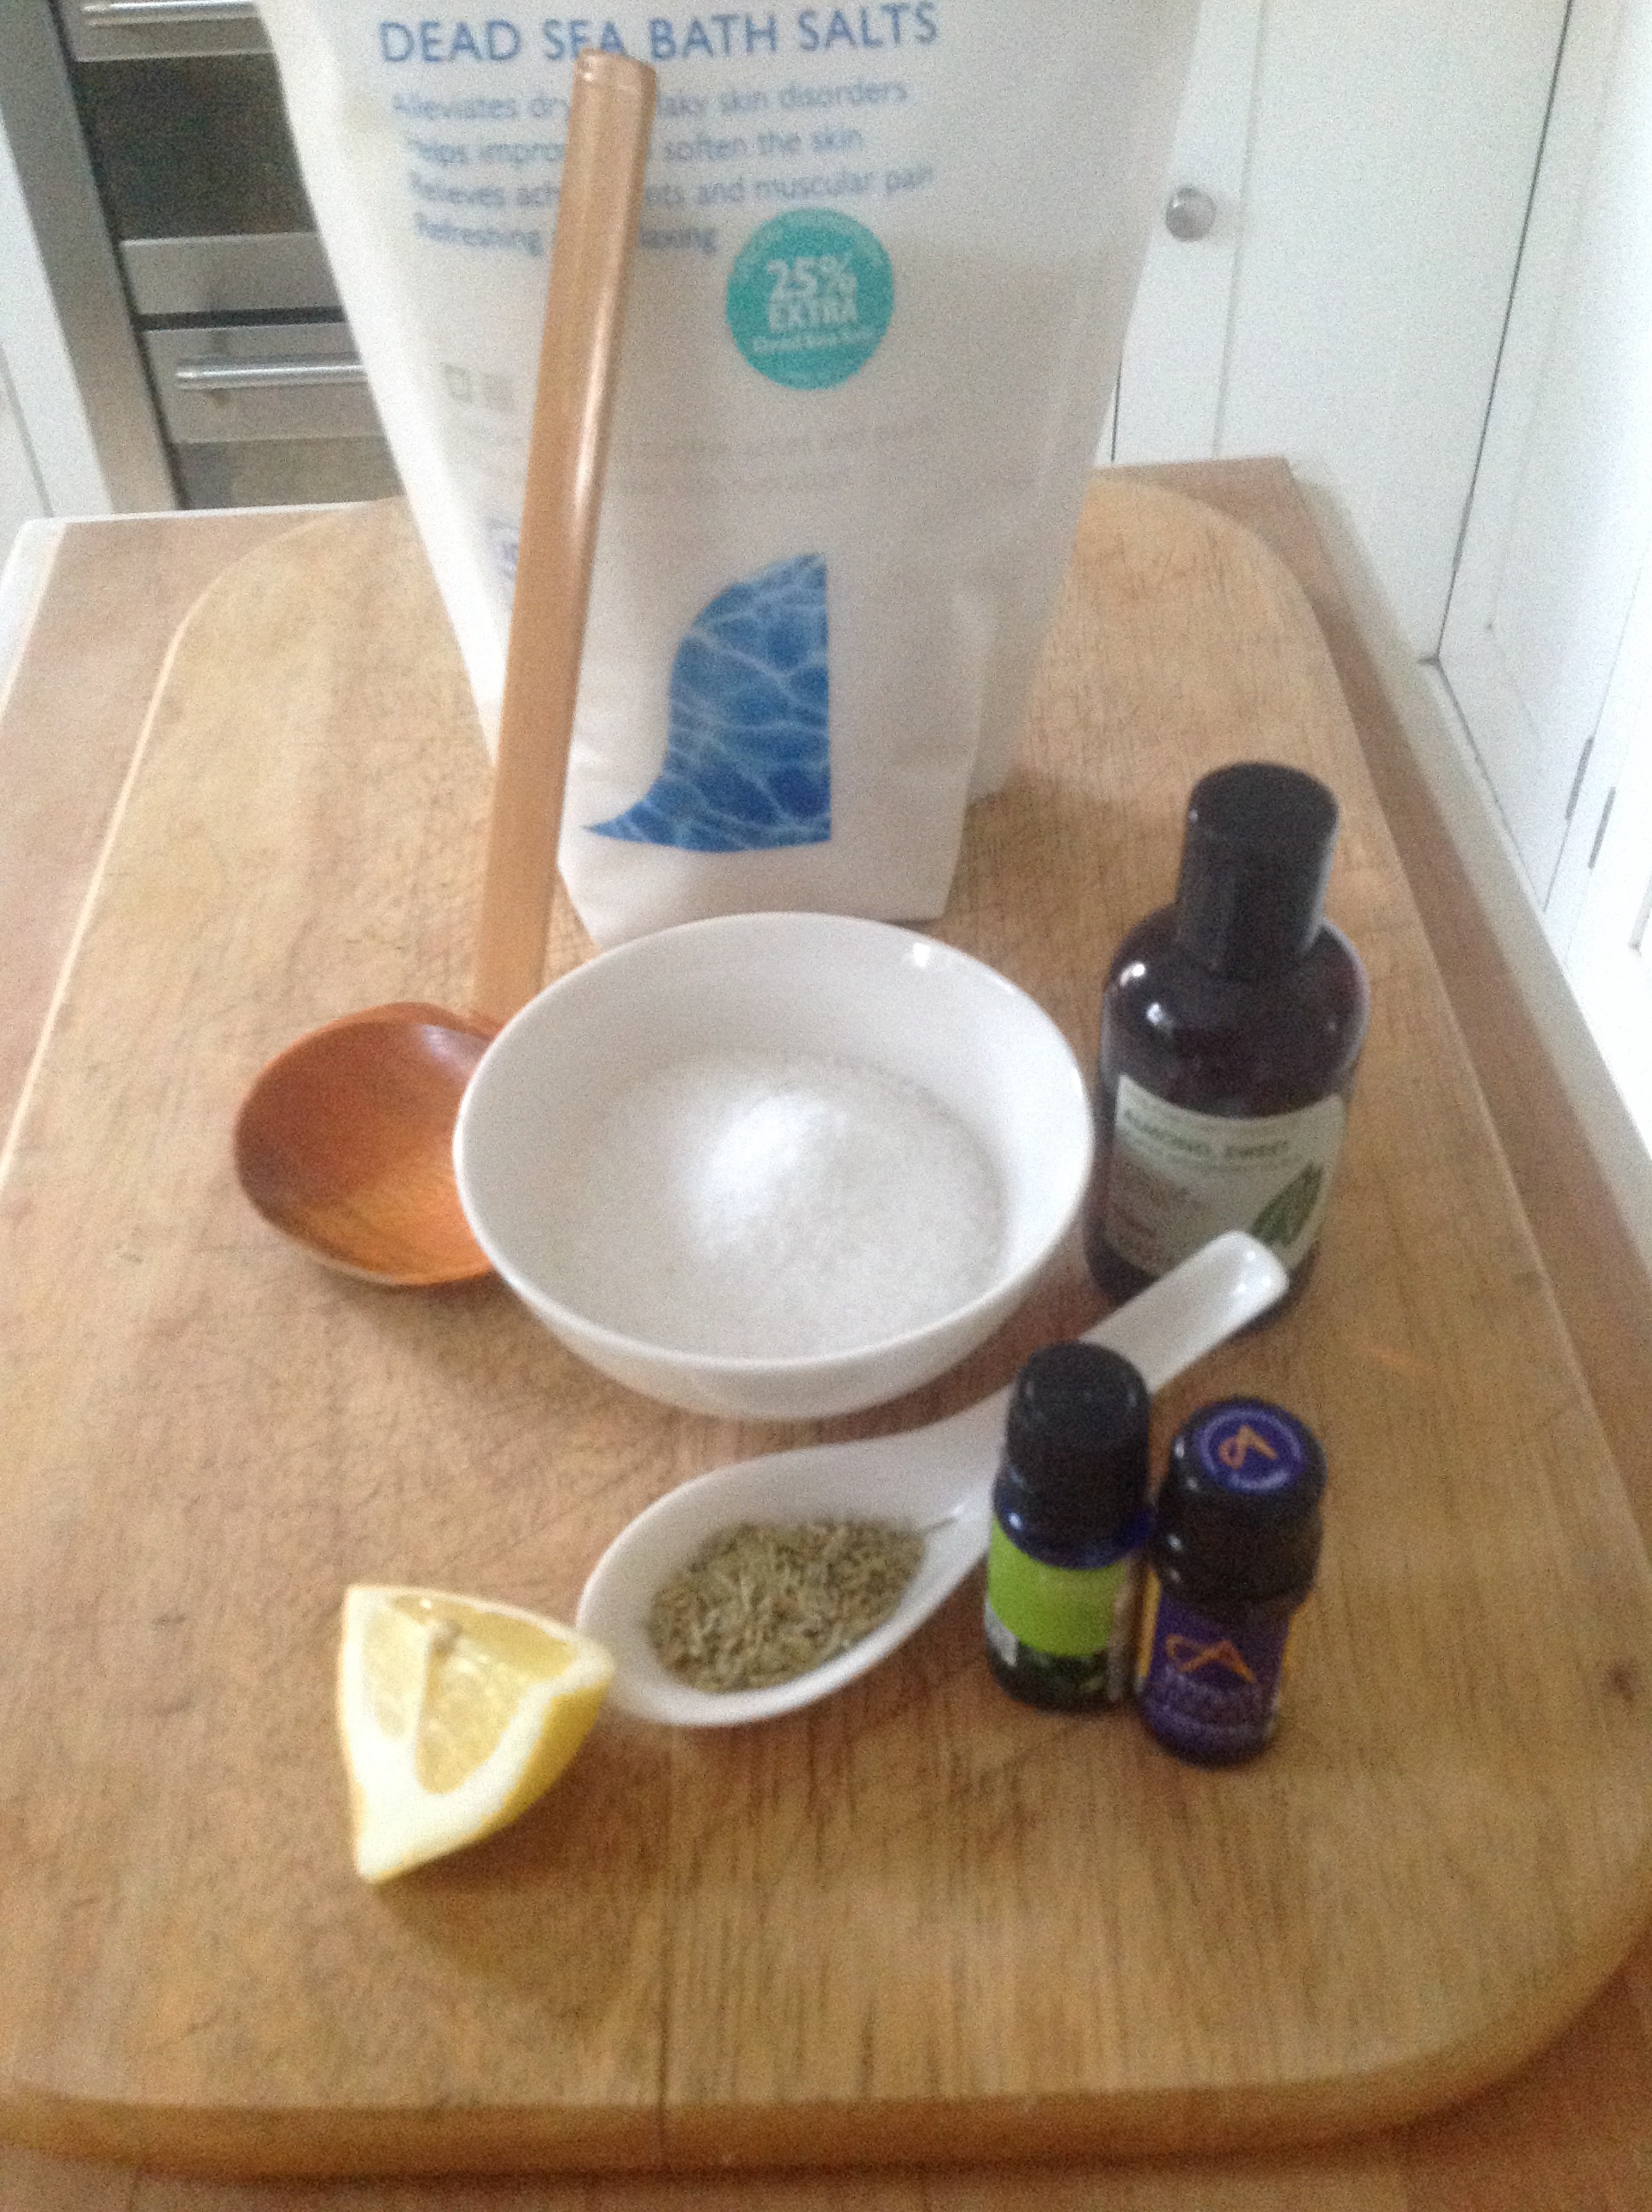 Lavender and Lemon essential oil, with Dead Sea salt foot scrub